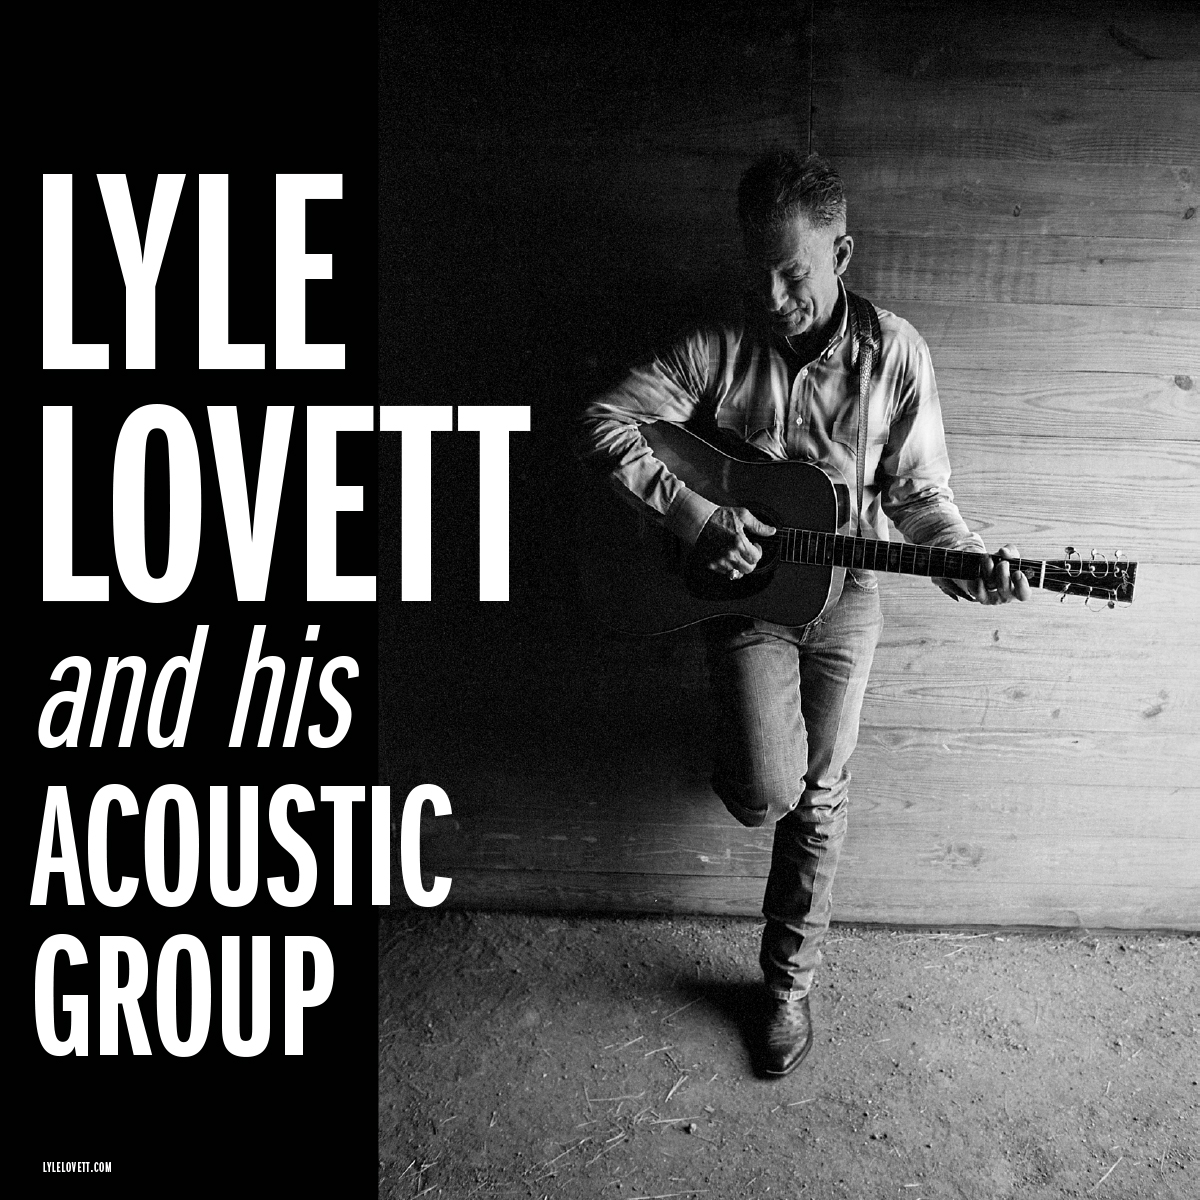 Lyle Lovett in Eureka Springs